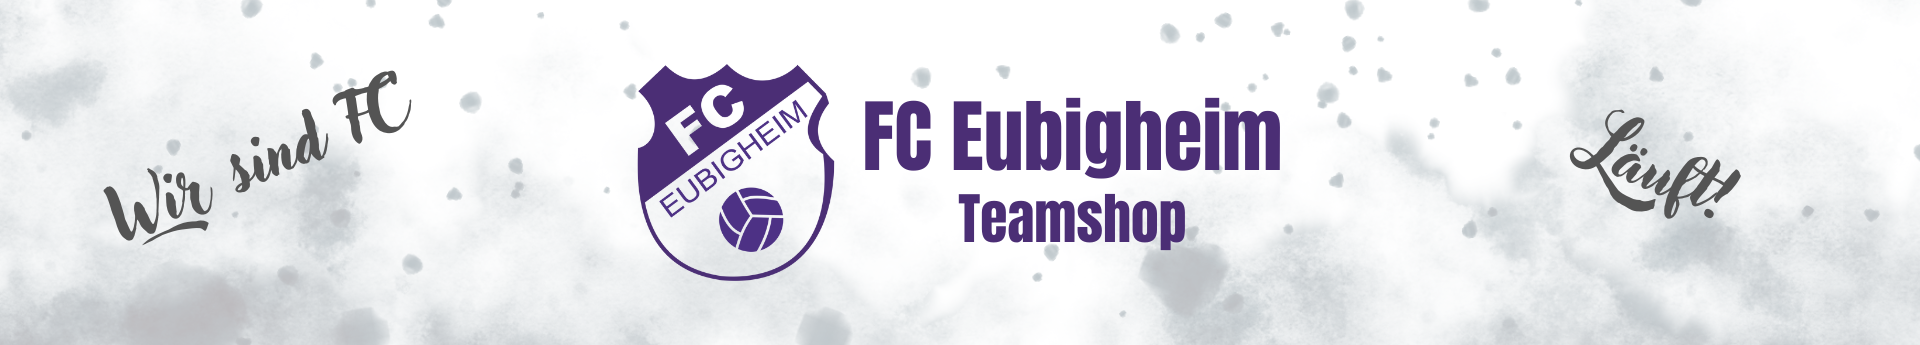 FC Eubigheim Title Image